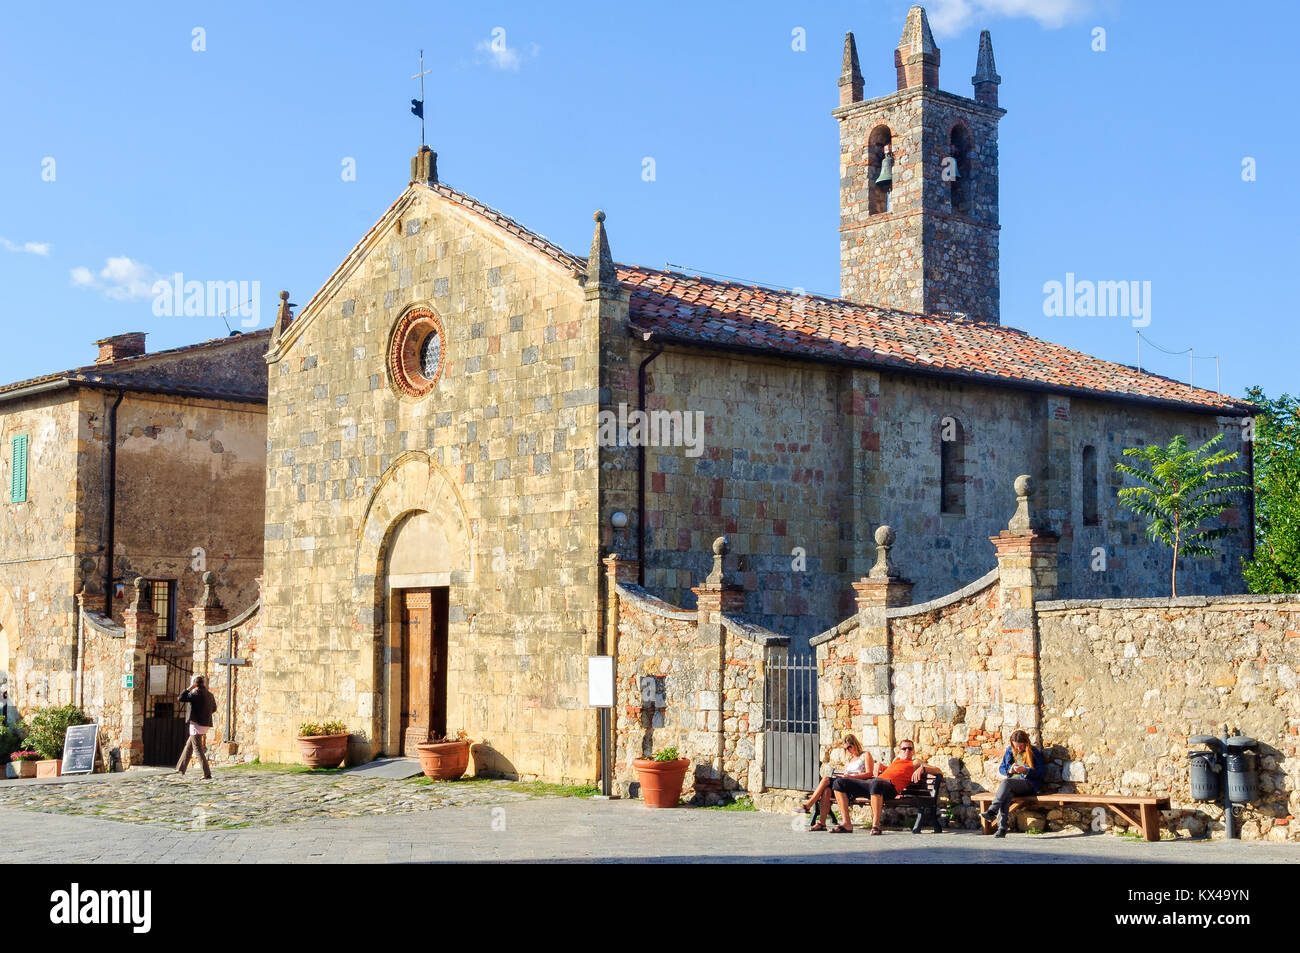 The parish church of Santa Maria Assunta on the pilgrimage to Rome - Monteriggioni, Italy Stock Photo